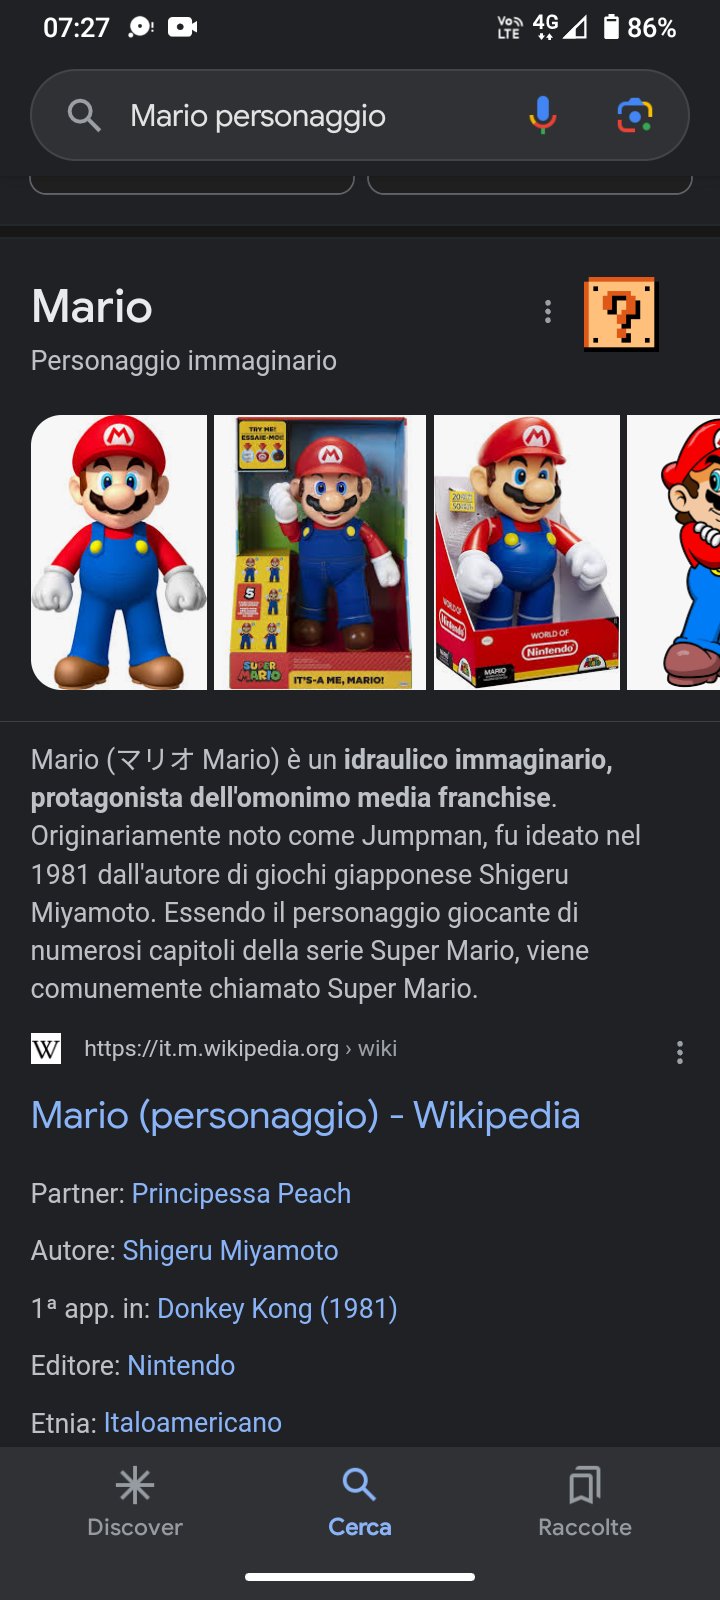 Mario Character Italian Wiki by Nicholasblasi on DeviantArt